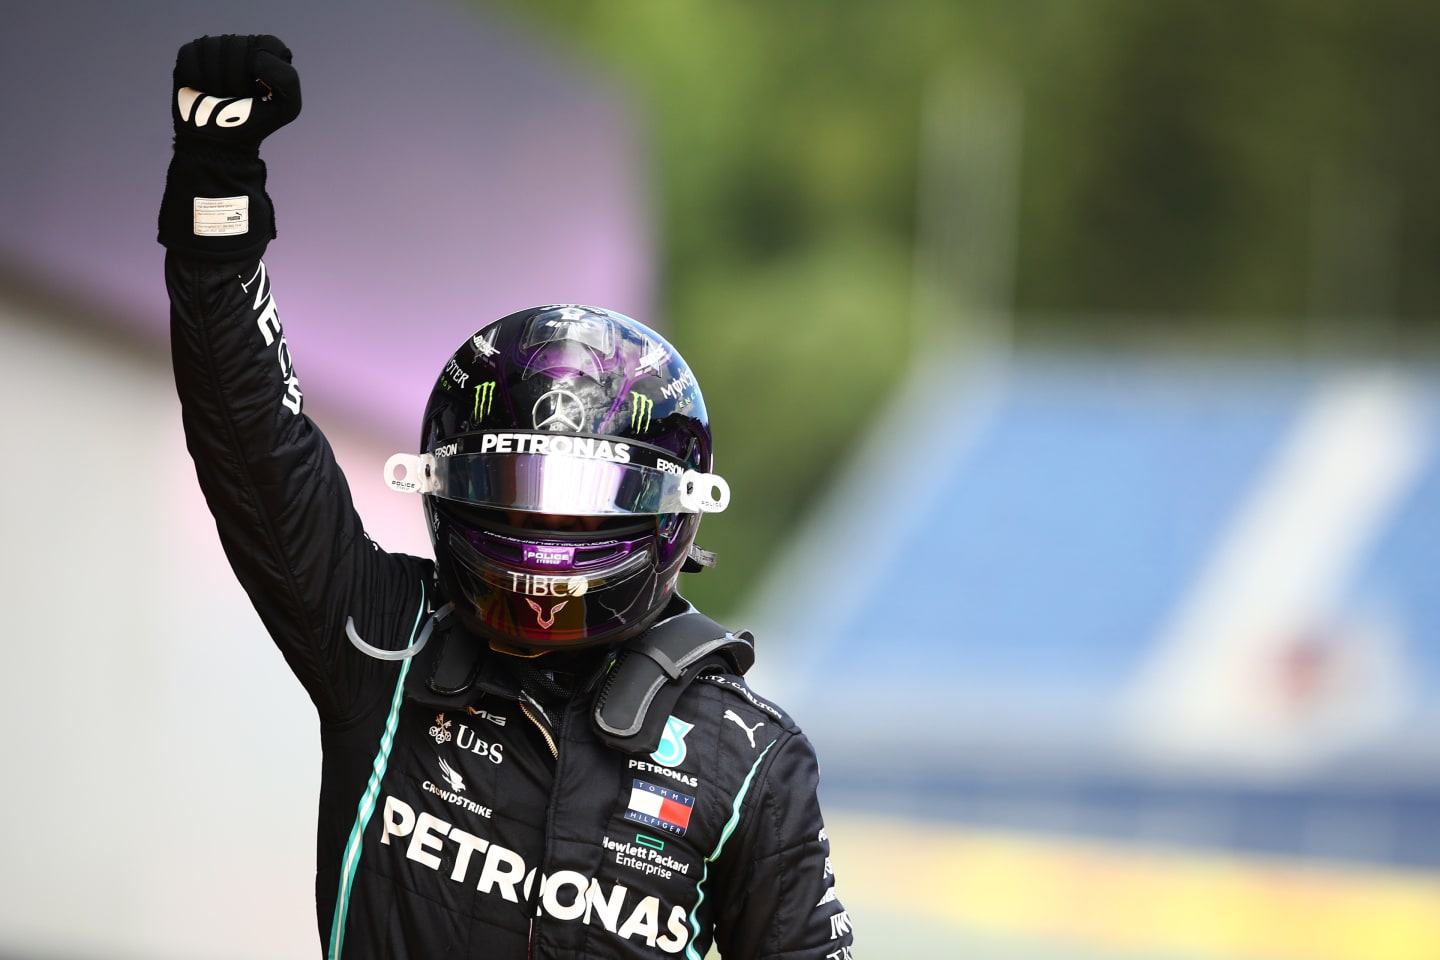 SPIELBERG, AUSTRIA - JULY 12: Lewis Hamilton of Great Britain and Mercedes GP celebrates in parc